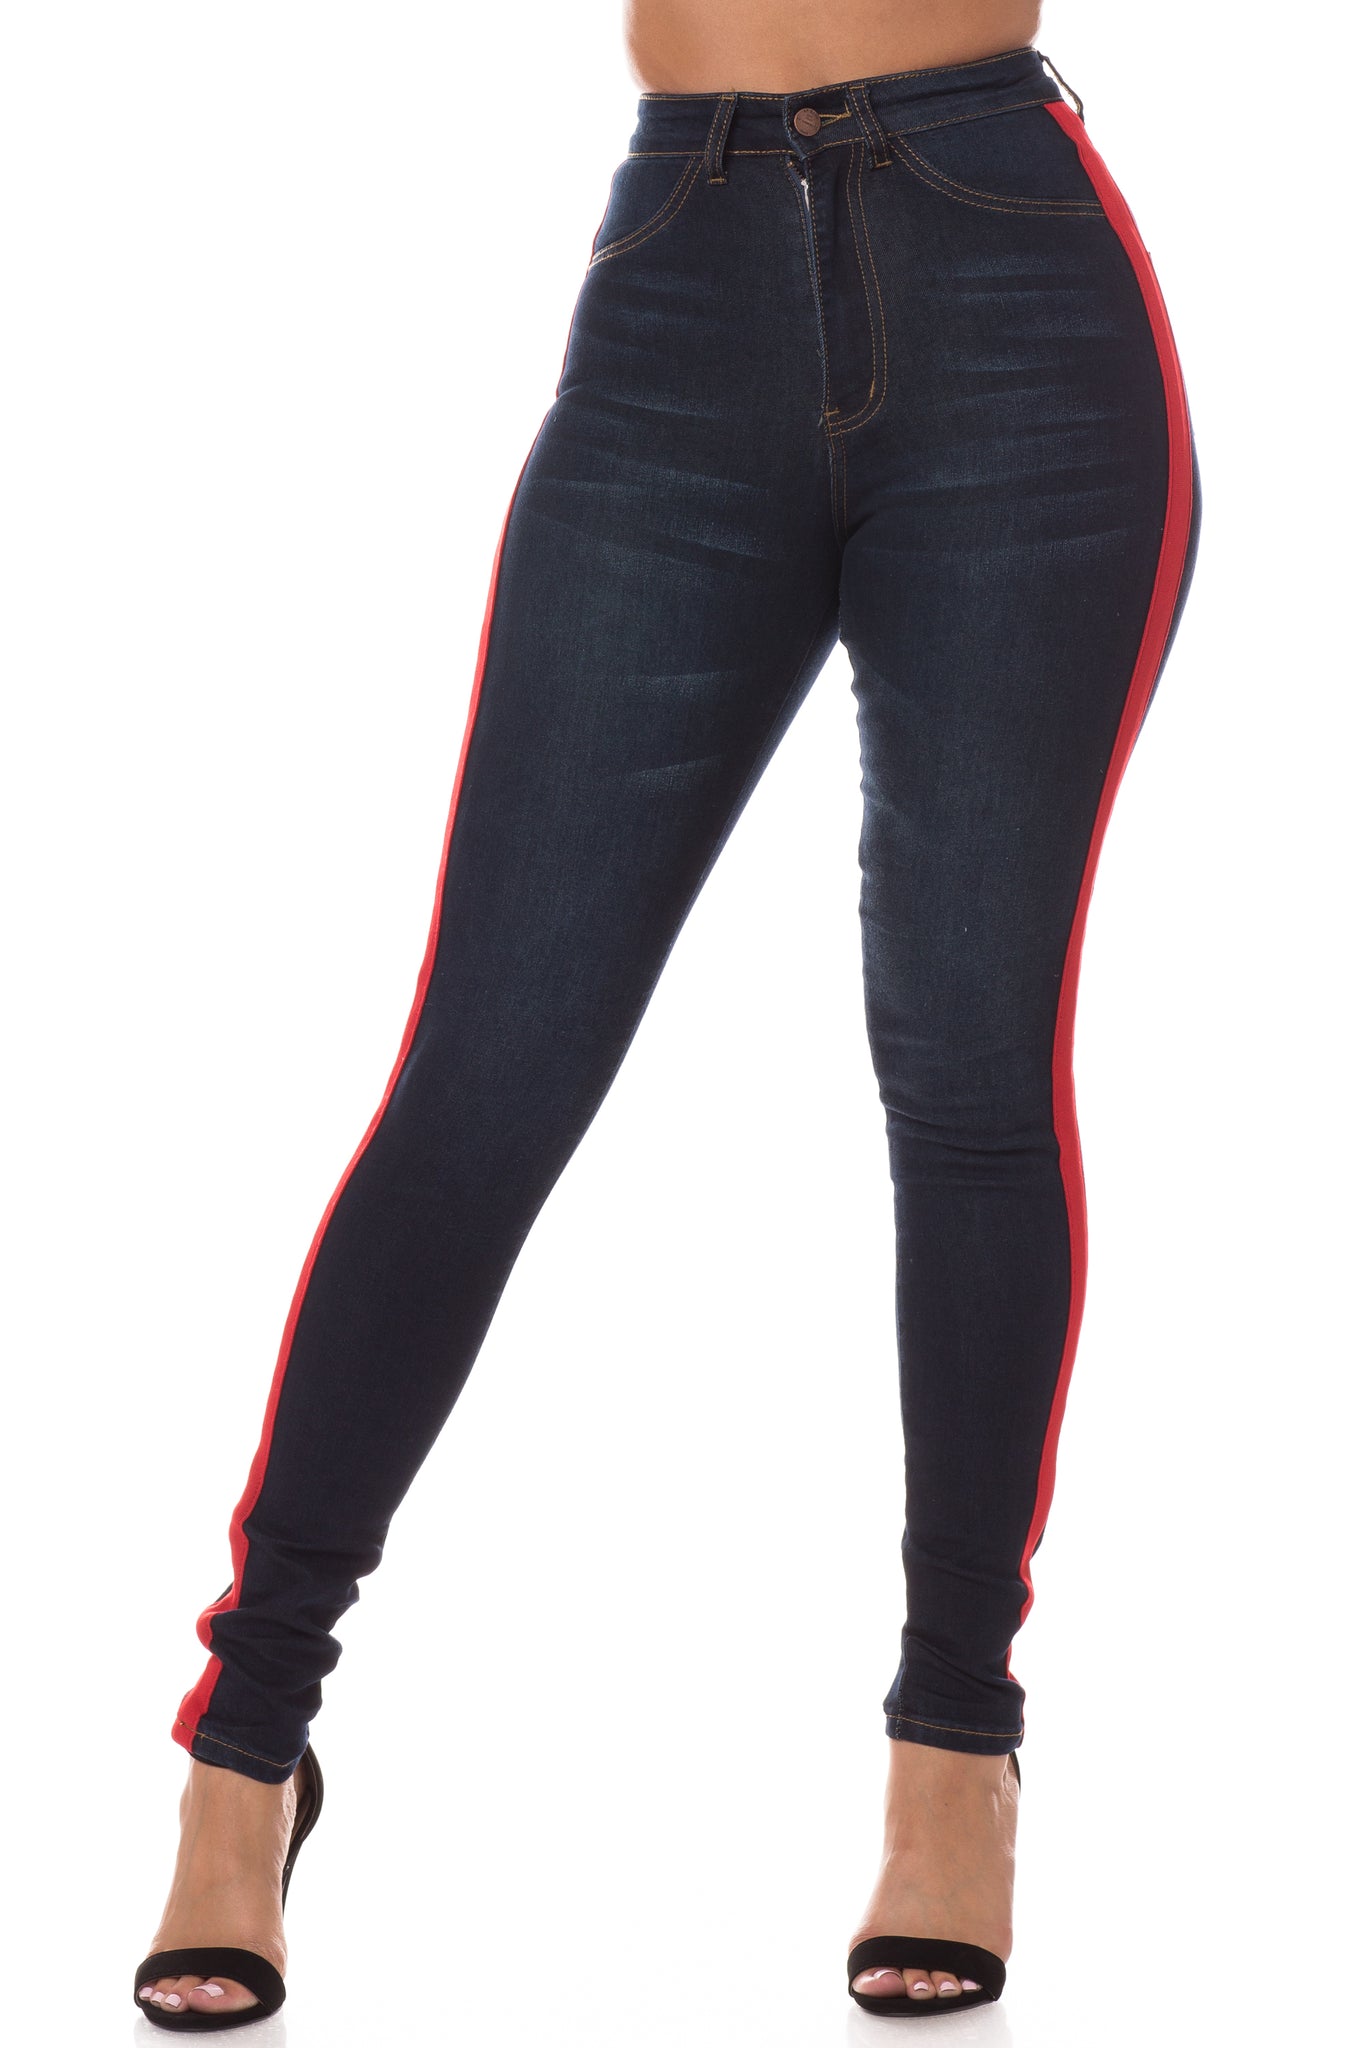 women full length skinny super high rise high waisted jeans pants